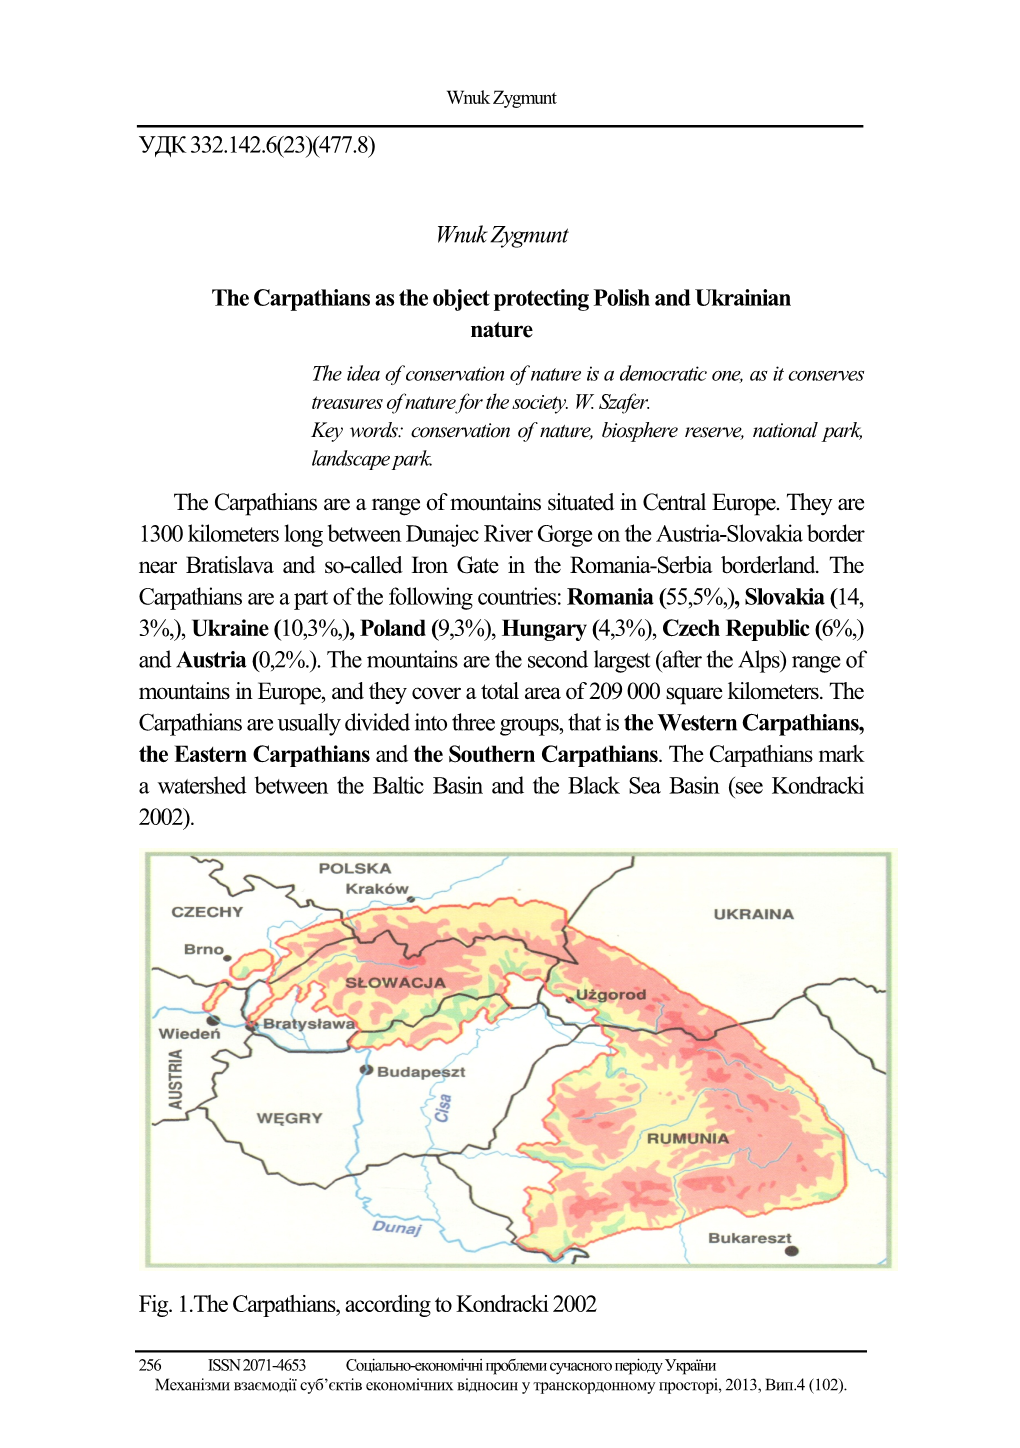 The Carpathians As the Object Protecting Polish and Ukrainian